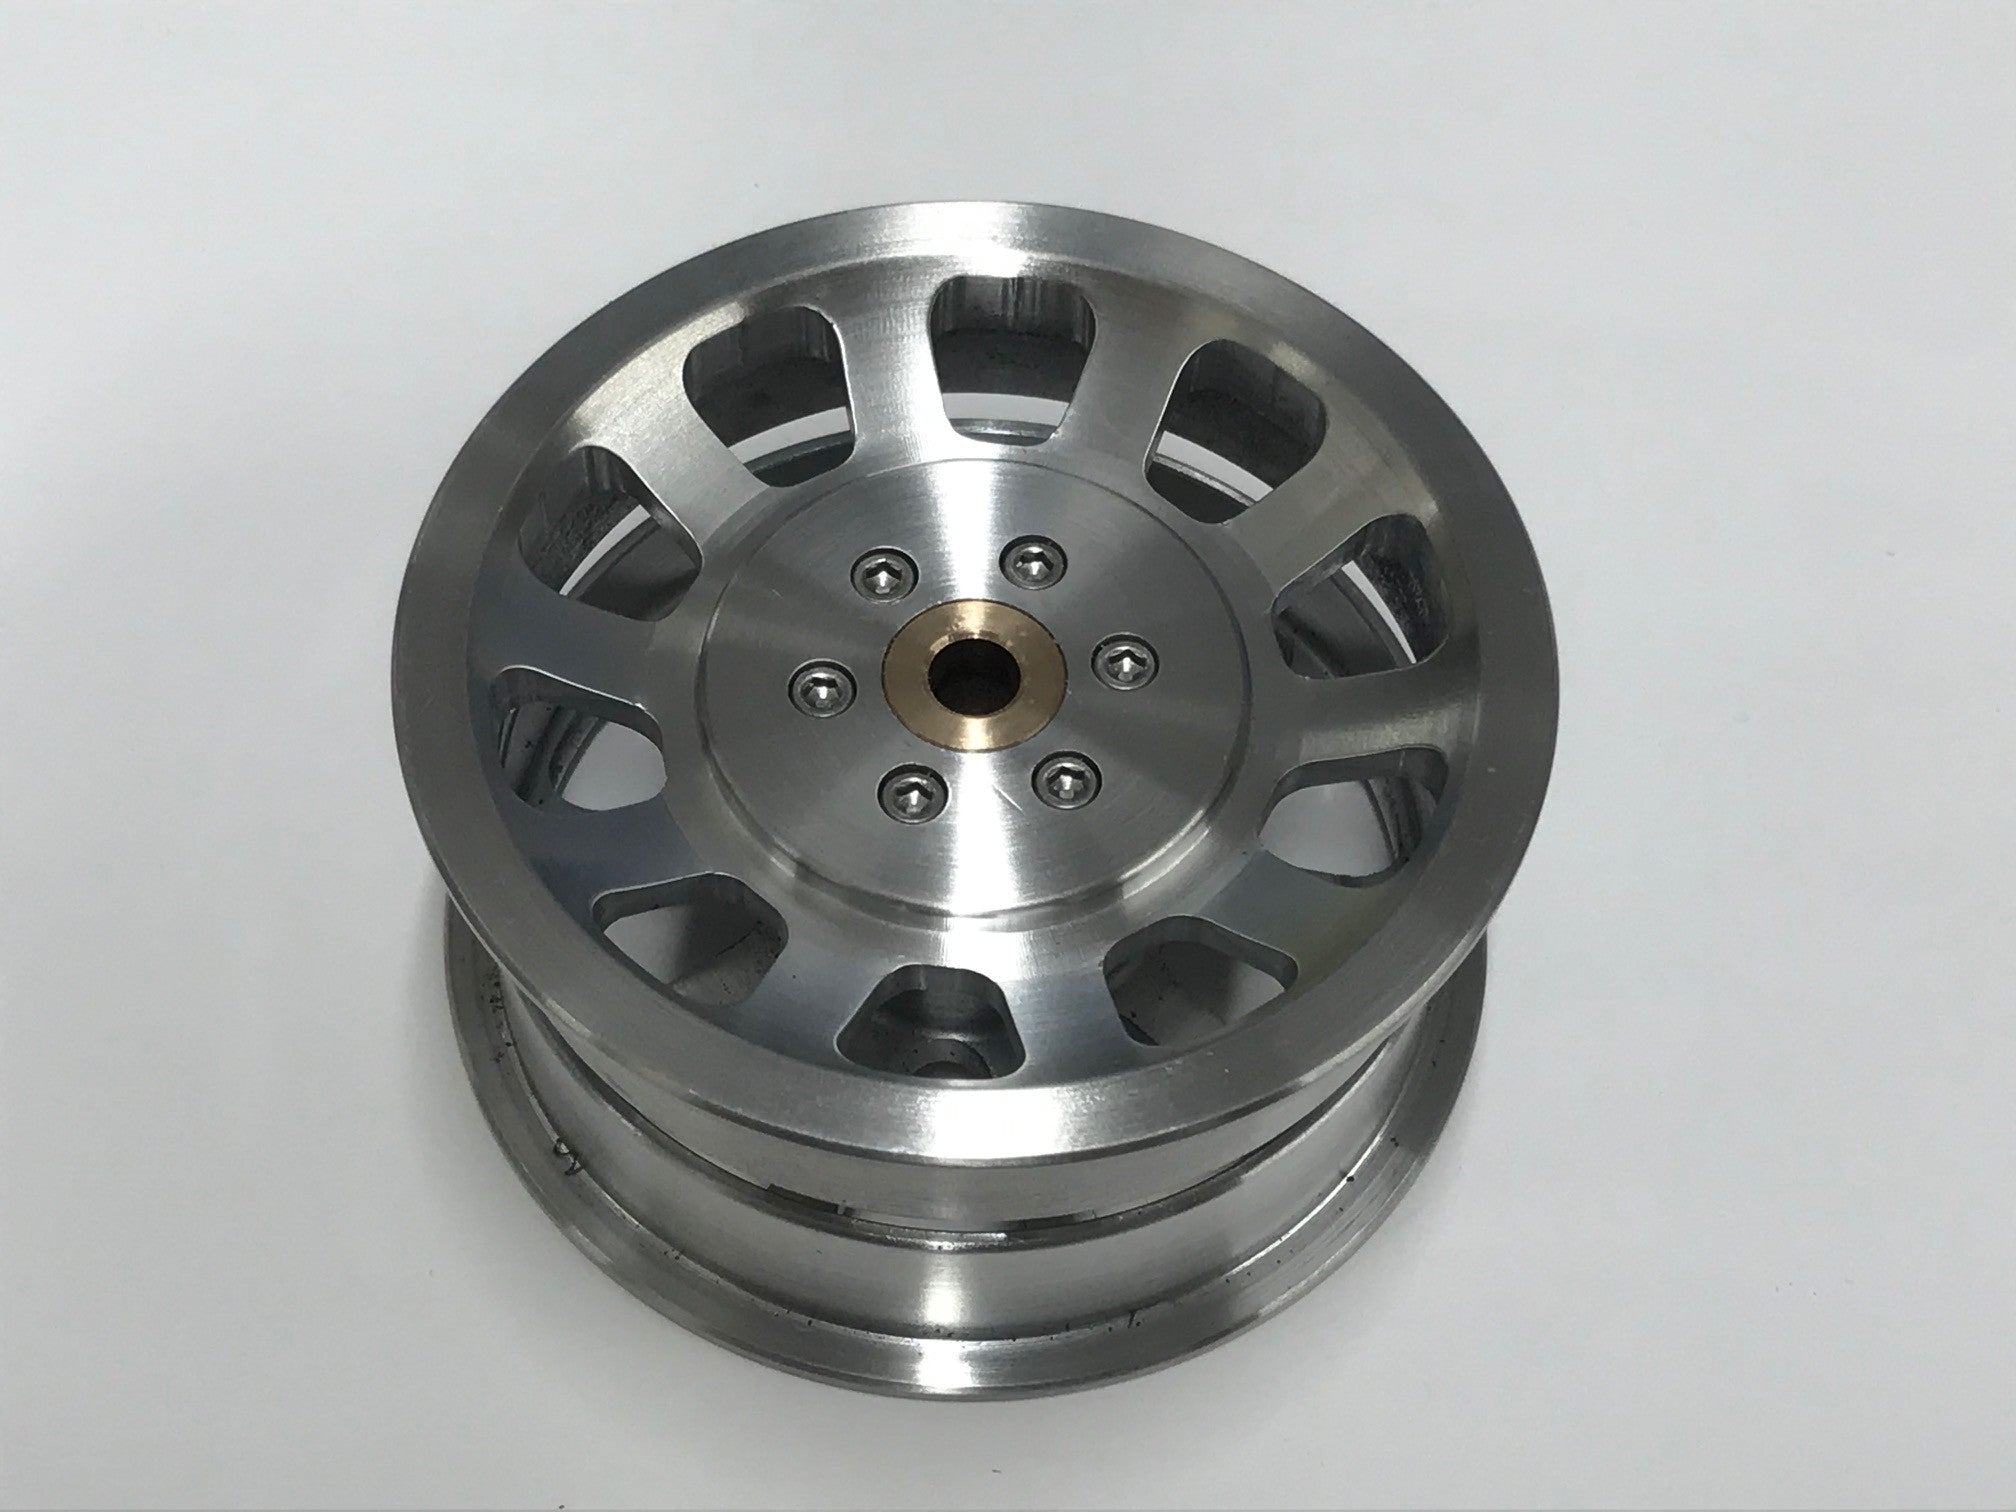 Robart Aluminium Wheel 6 Spoke Hub Including 3.0" & Straight Tread Tyre 138C614 + U300 Tyre